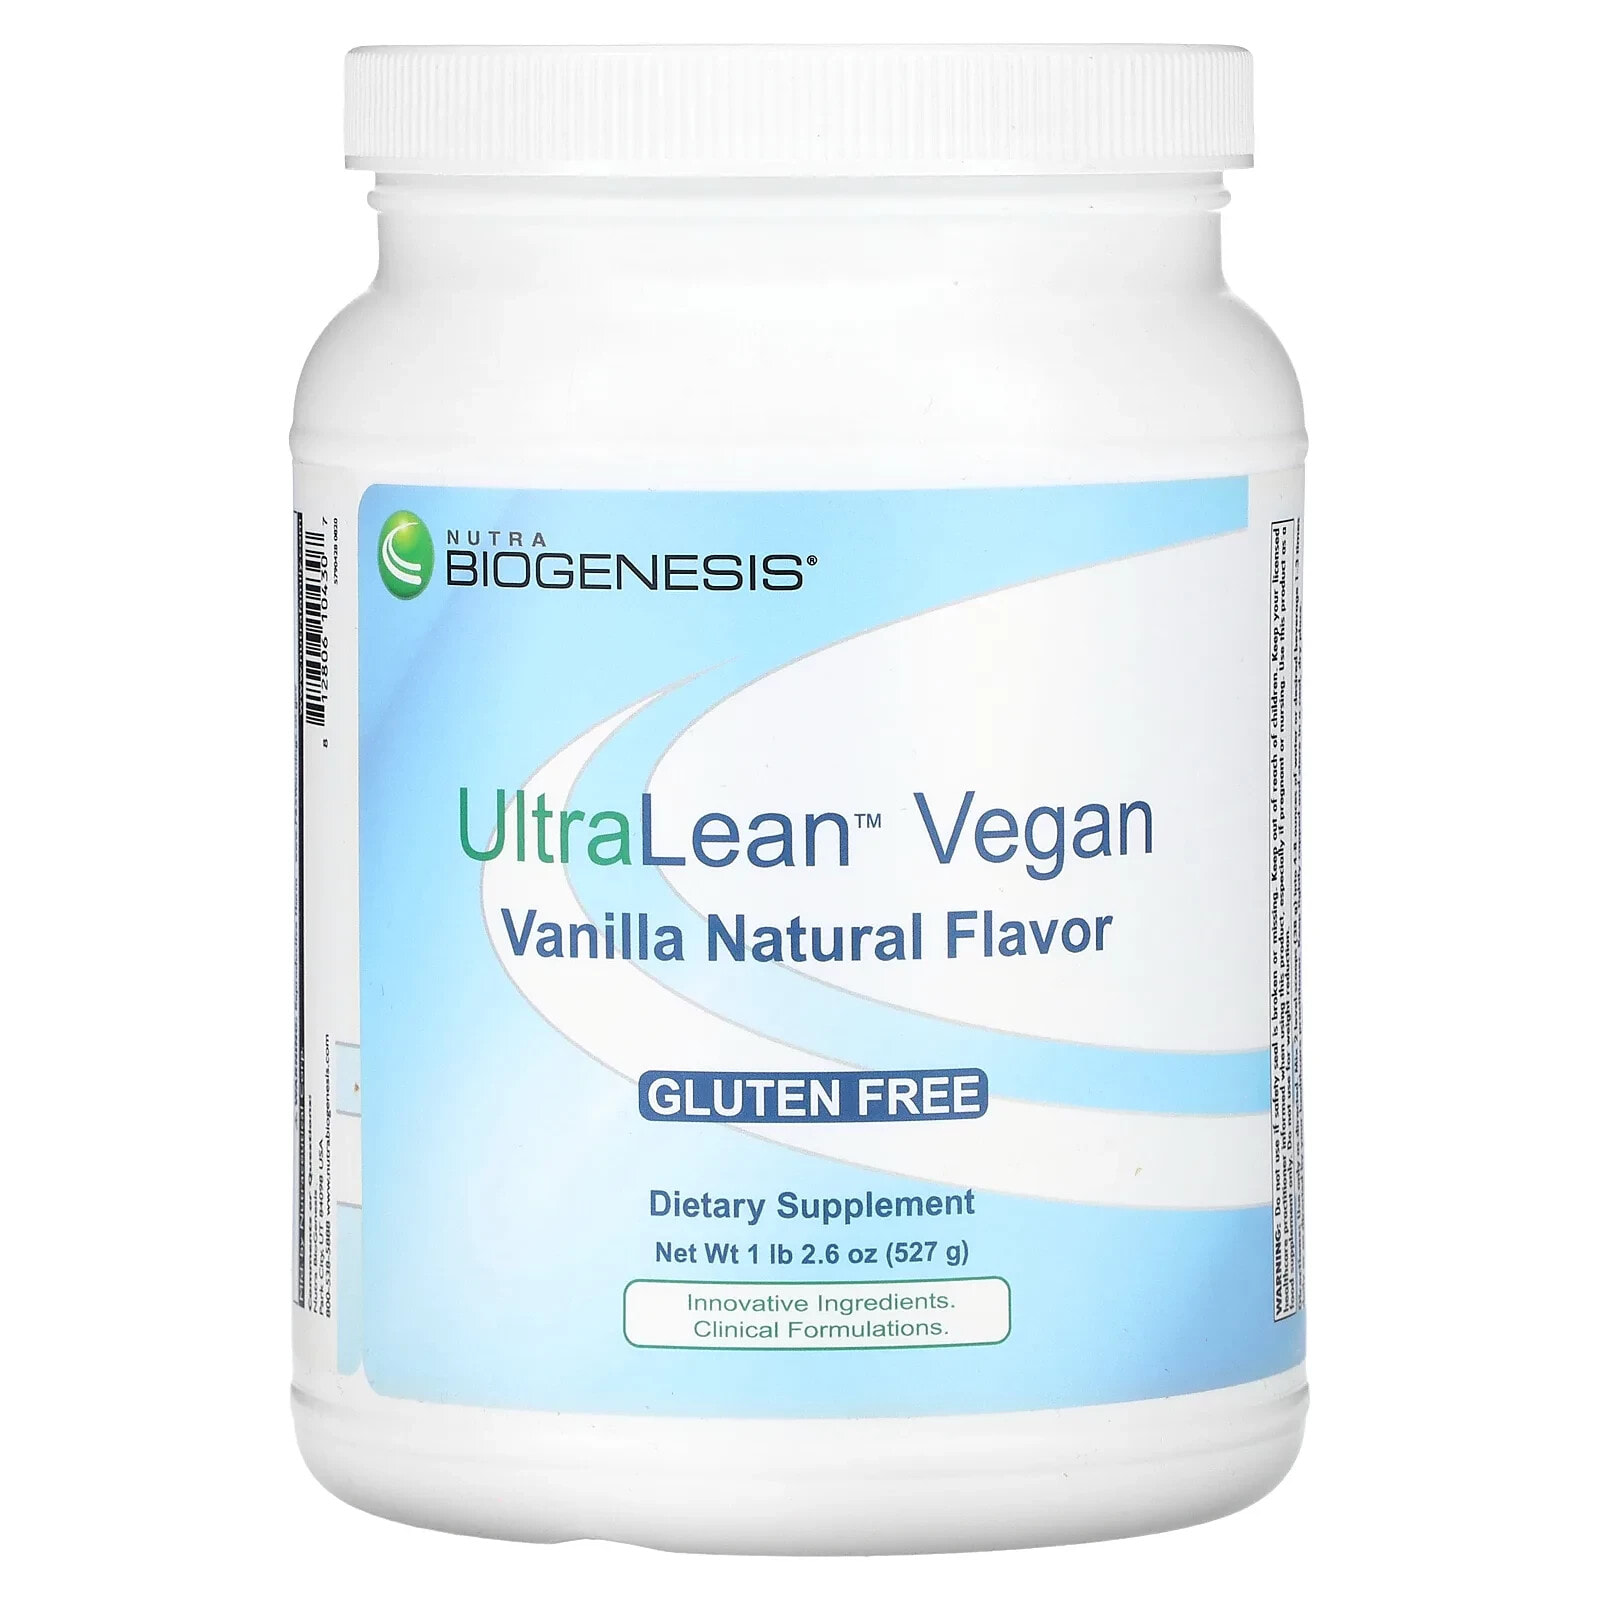 UltraLean Vegan, Natural Vanilla, 1 lb 2.6 oz (527 g)